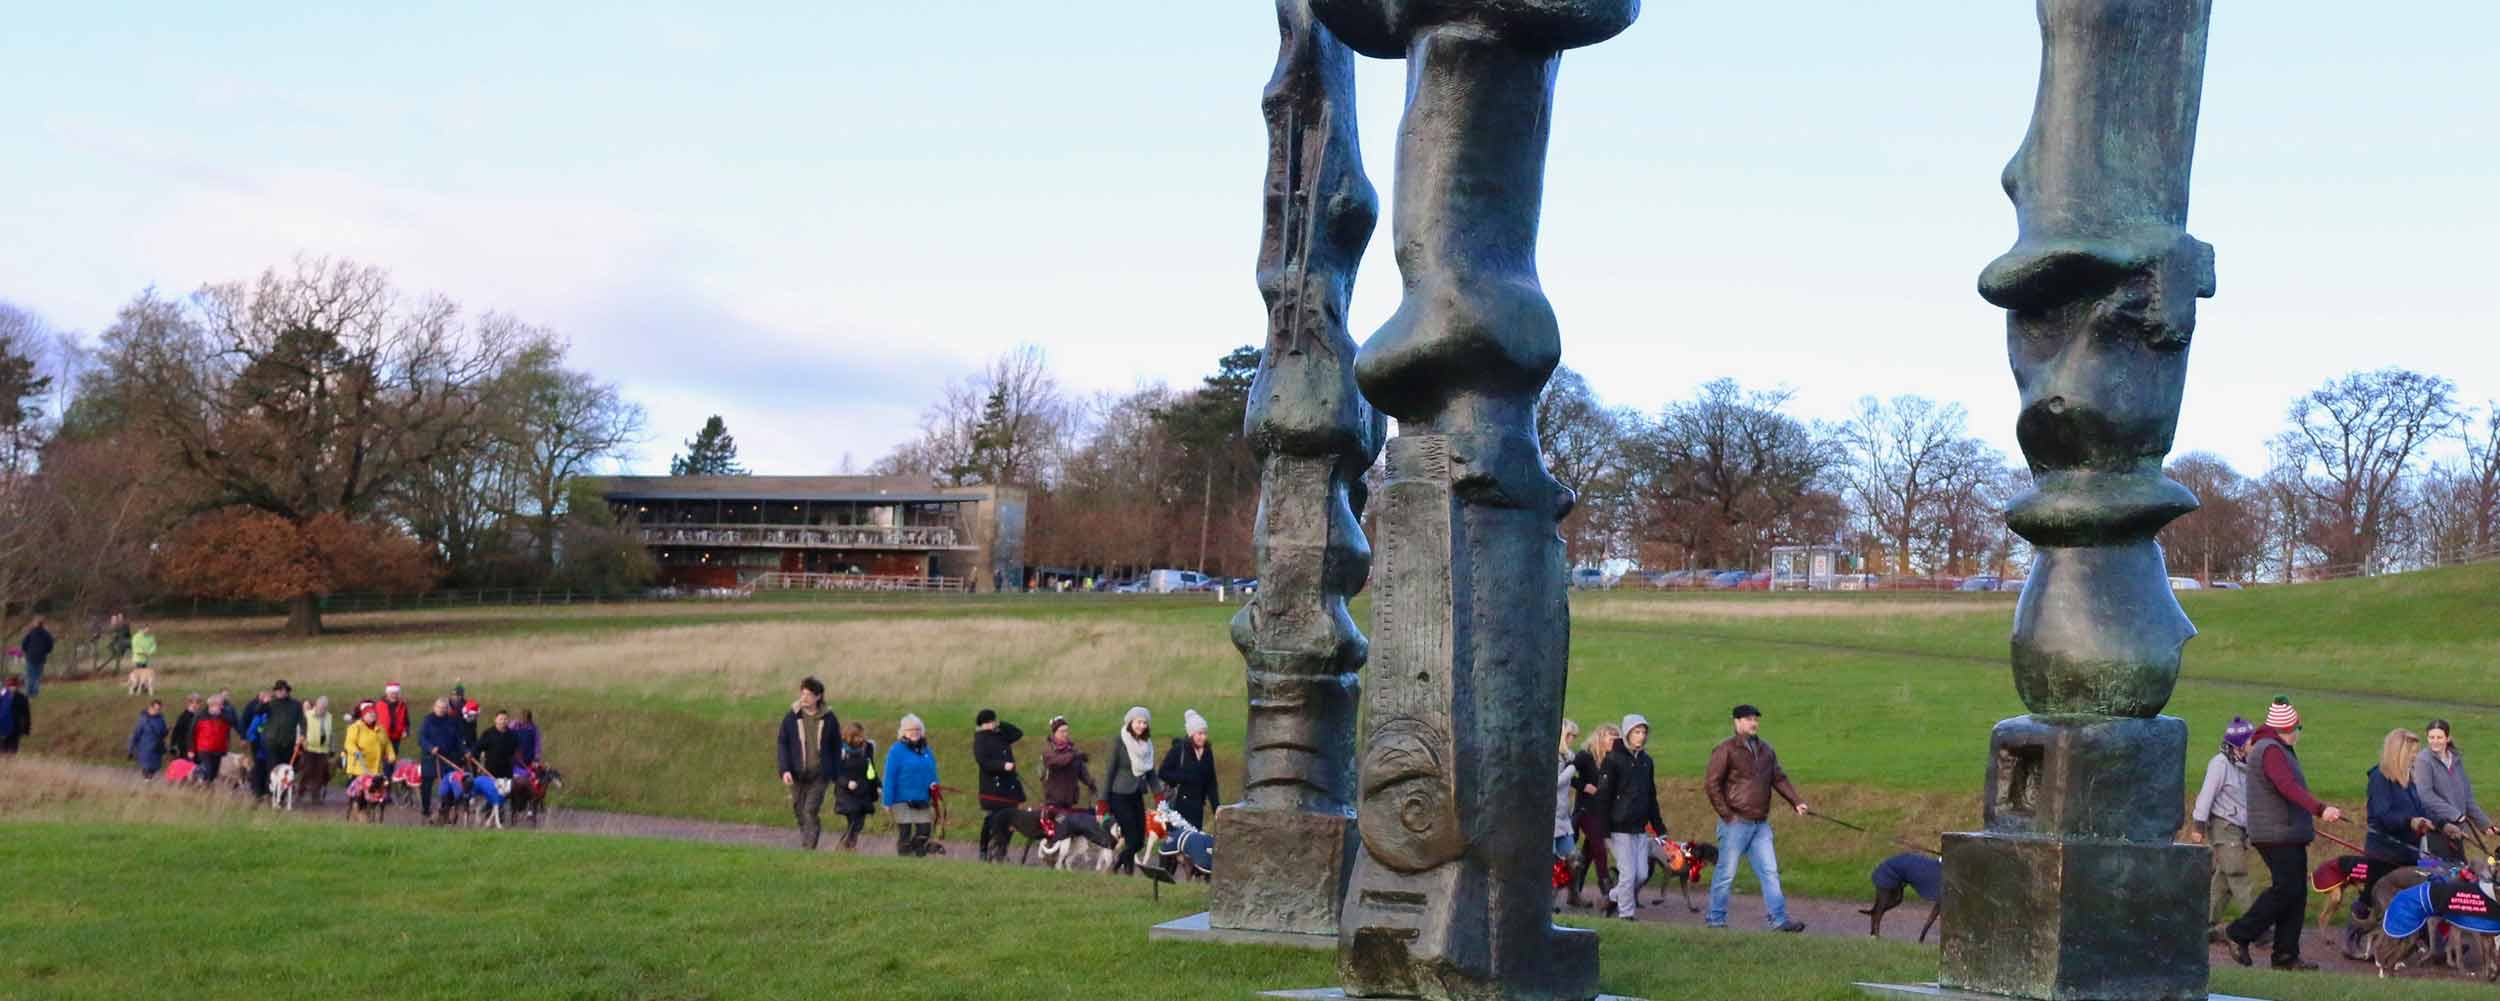 Santa Paws 2018 at Yorkshire Sculpture Park